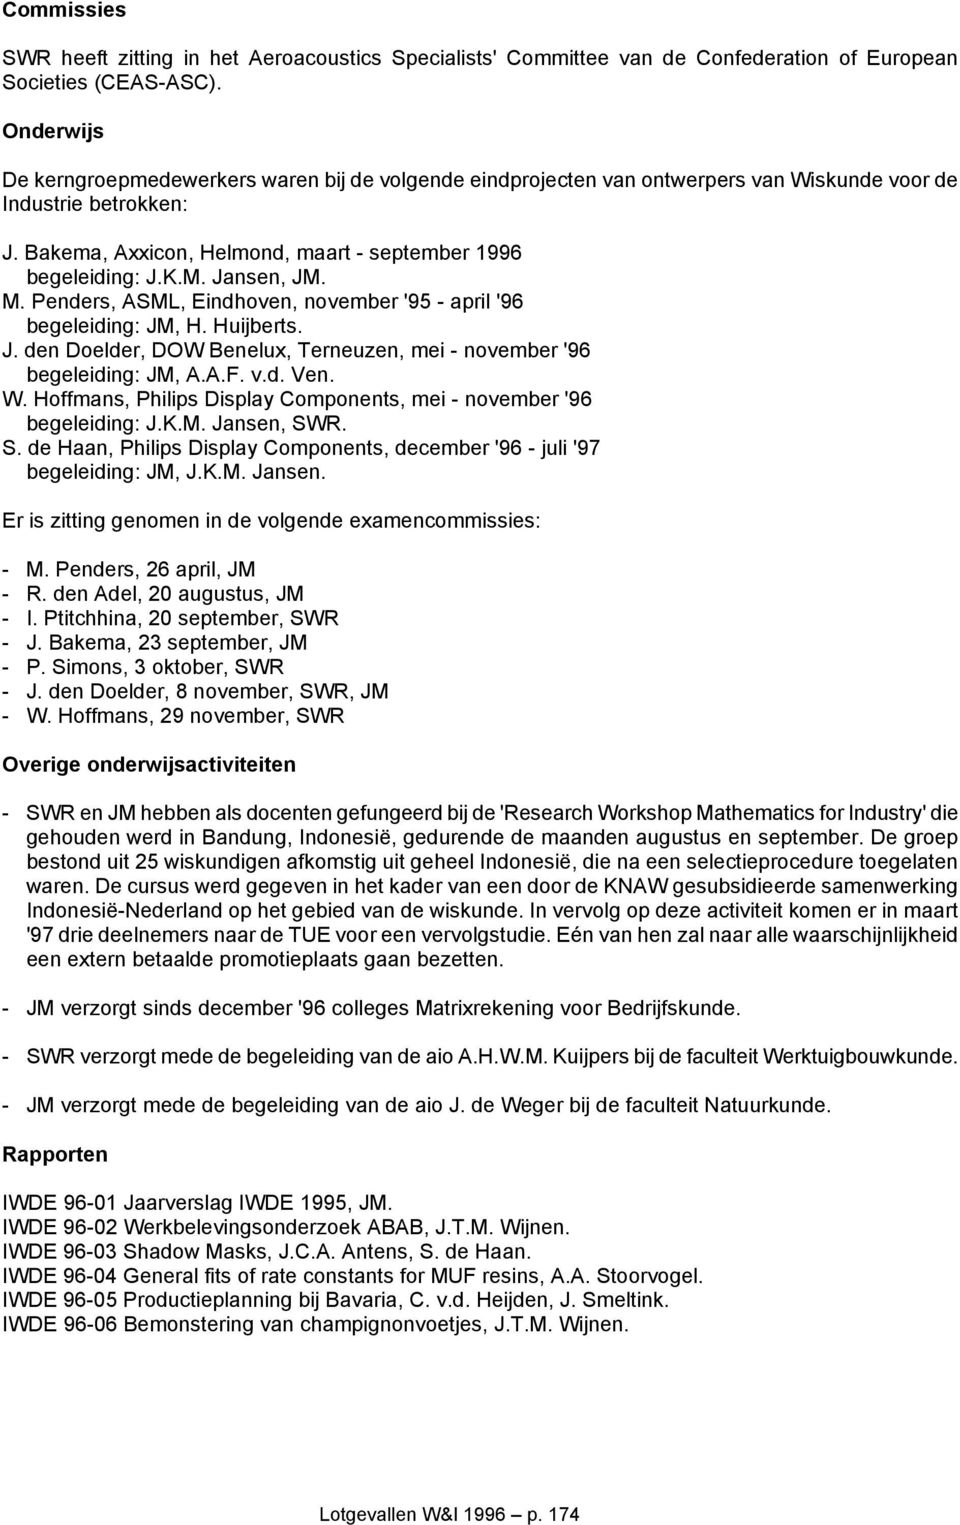 Jansen, JM. M. Penders, ASML, Eindhoven, november '95 - april '96 begeleiding: JM, H. Huijberts. J. den Doelder, DOW Benelux, Terneuzen, mei - november '96 begeleiding: JM, A.A.F. v.d. Ven. W.